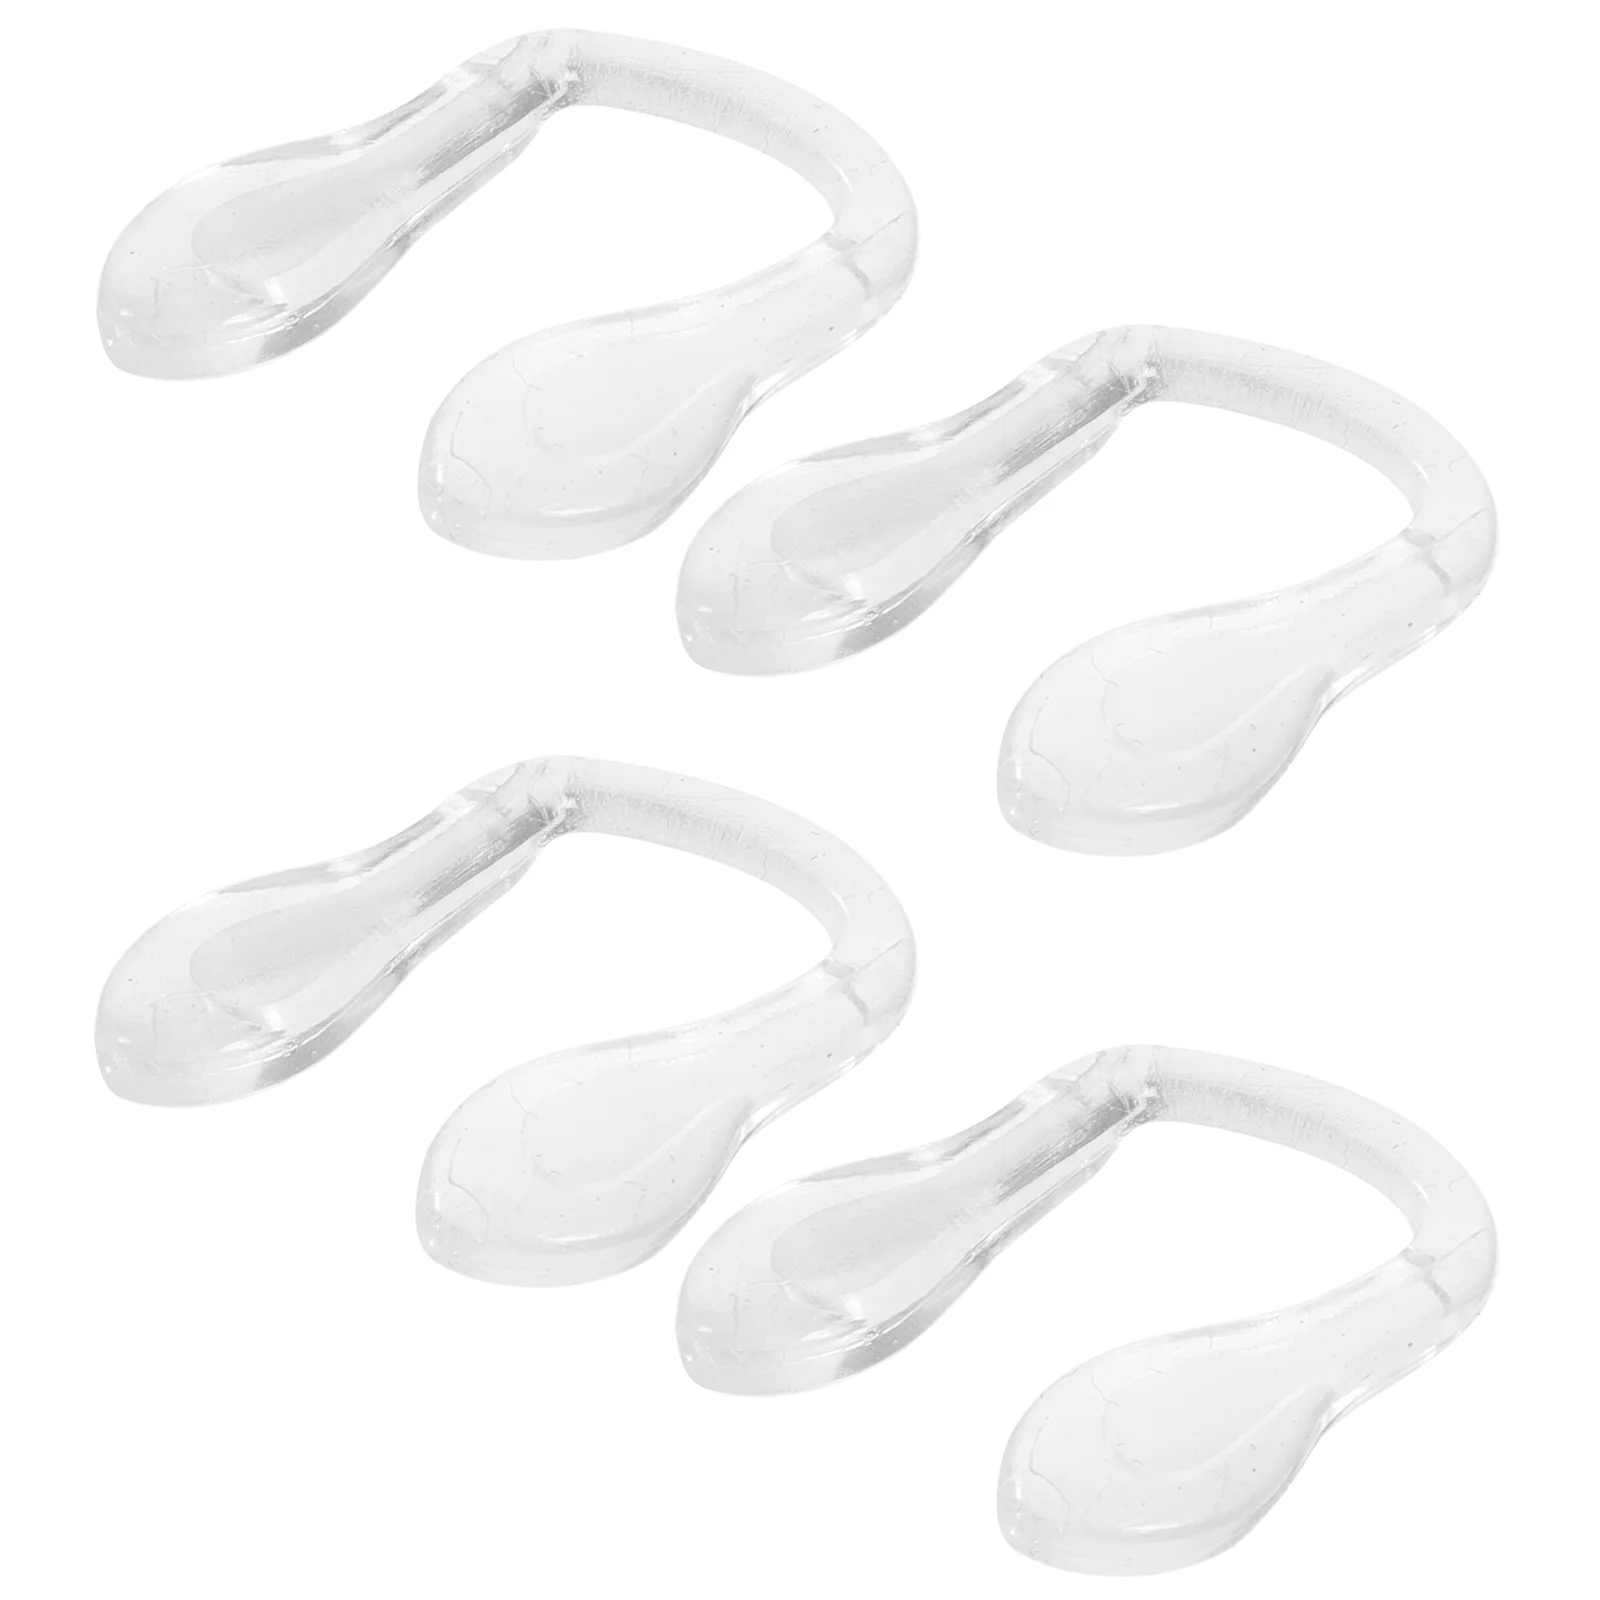 

4 Pcs Silicone Nose Pads Eyeglasses Cushion Clear Plastic Frames Your Bridge Parts Bayonet Accessories